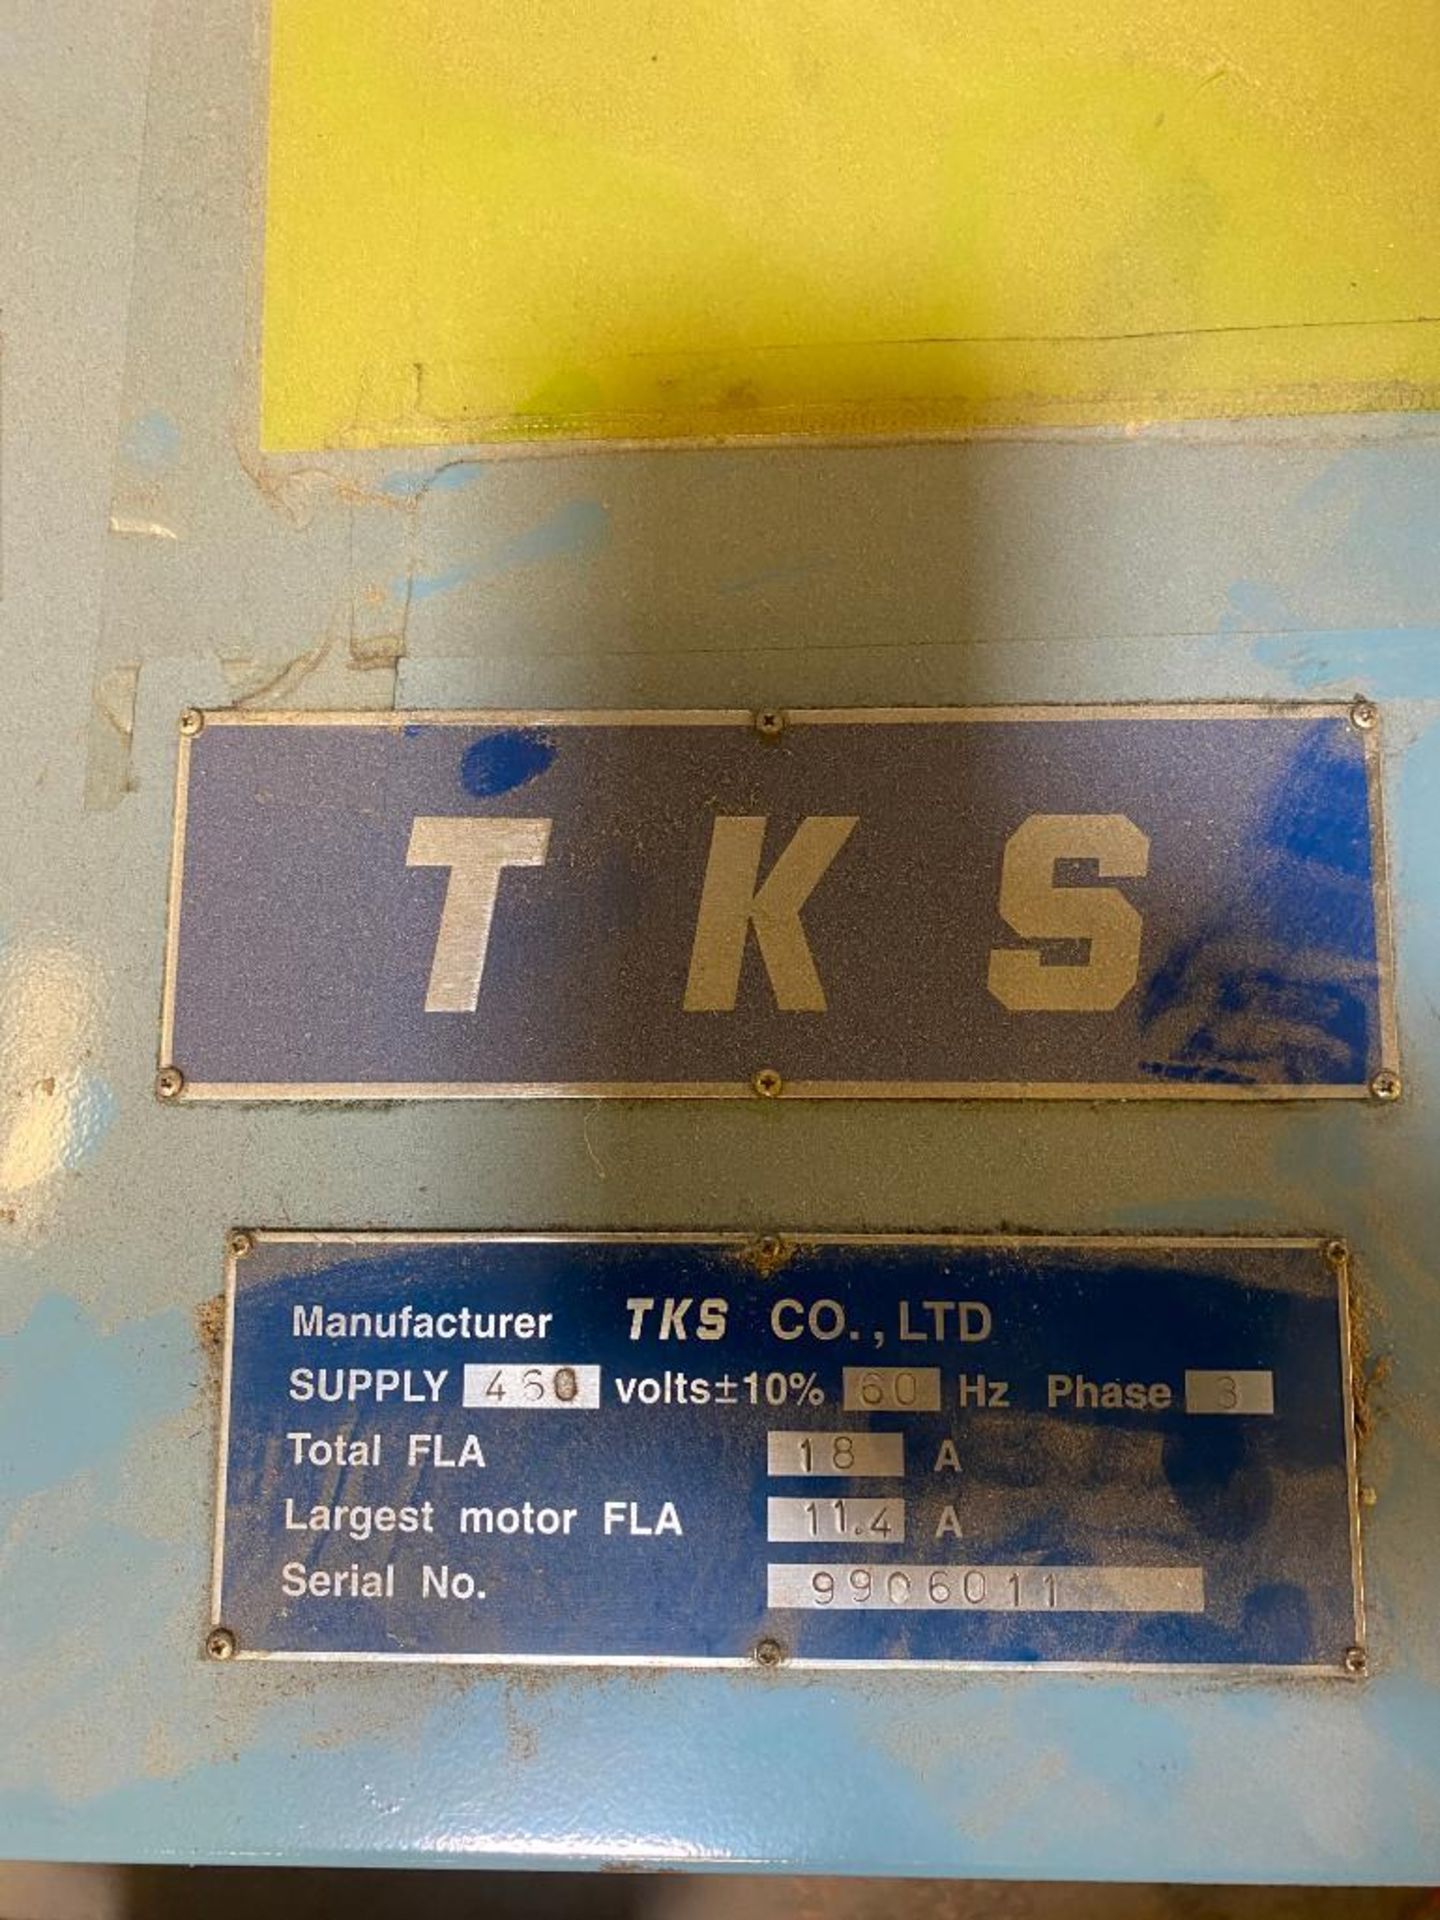 TKS CONTROL PANEL, 460 V, S/N 9906011 - Image 2 of 2